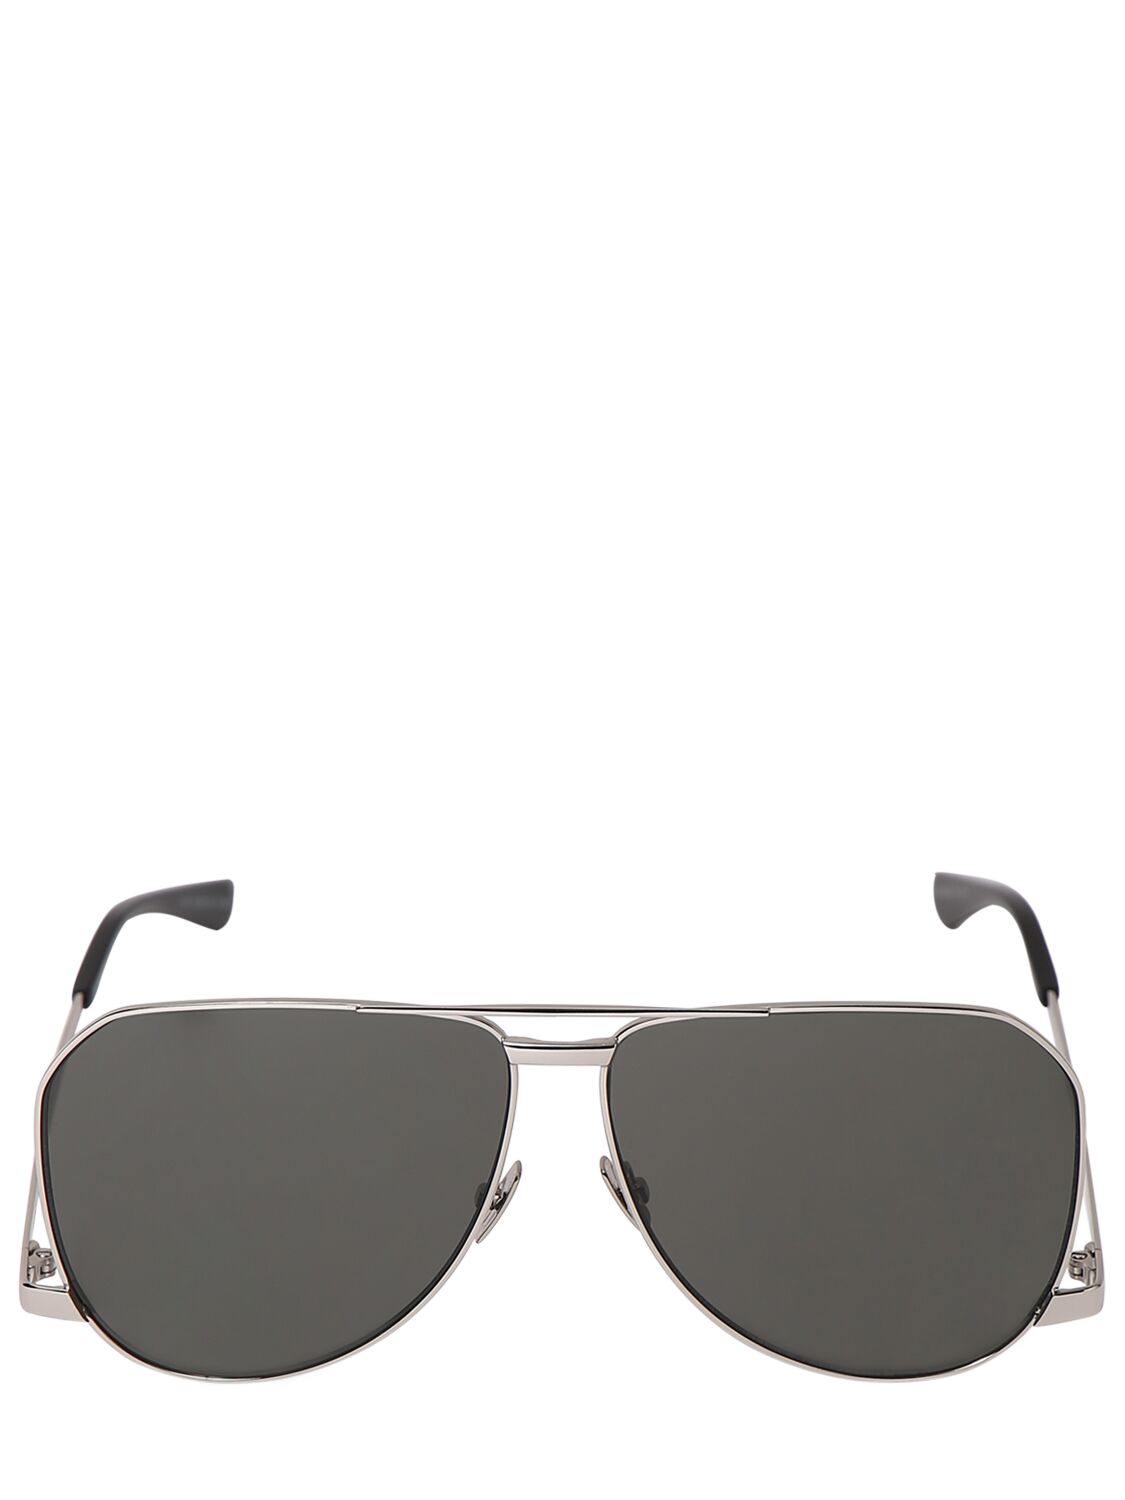 Image of Sl 690 Metal Sunglasses